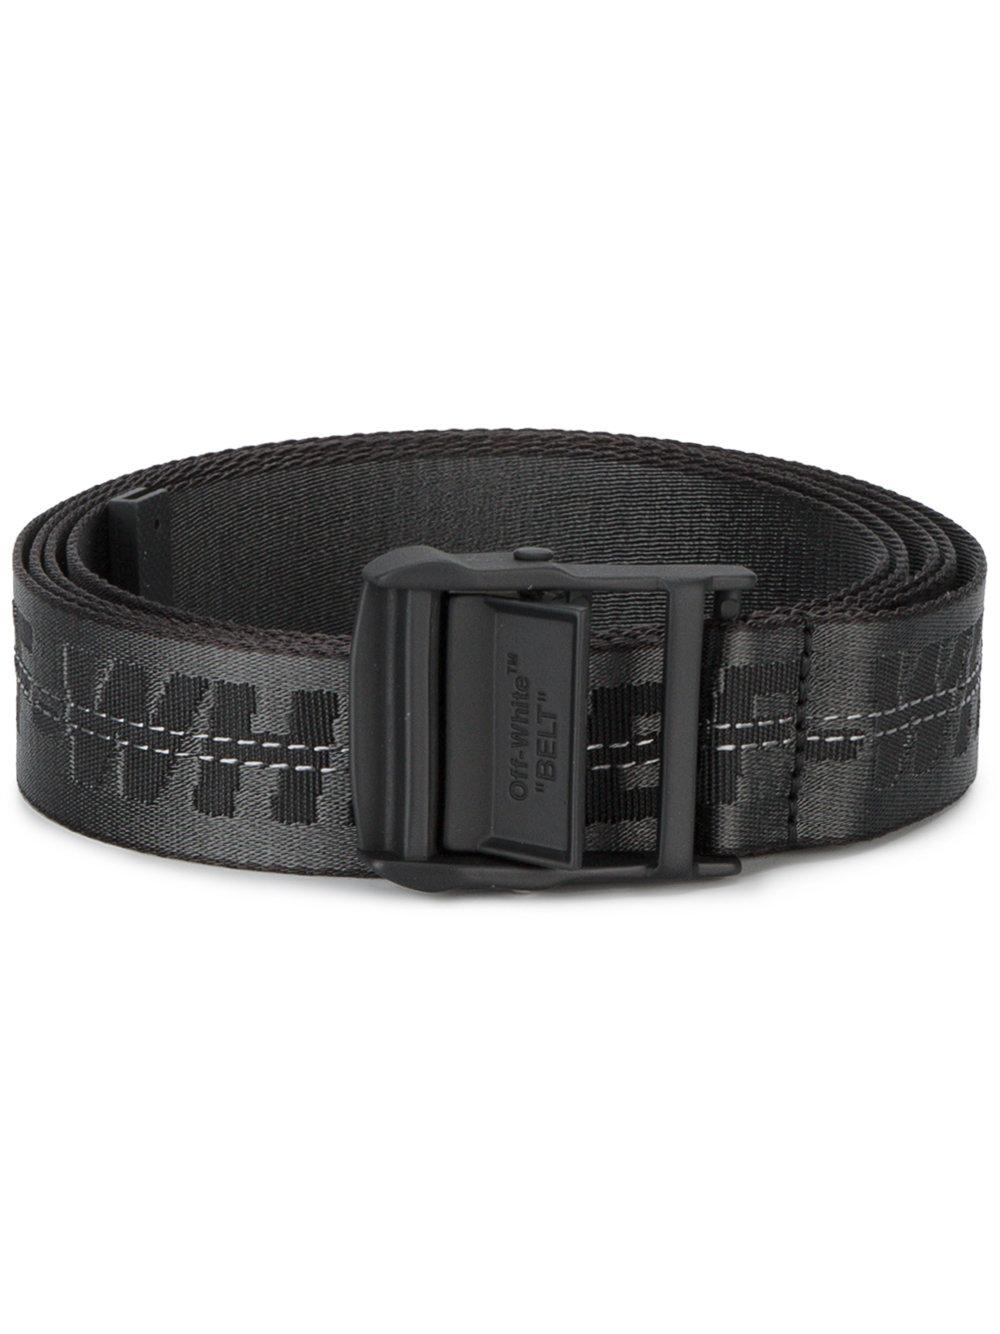 Off-White c/o Virgil Abloh Synthetic Industrial Oversized Belt in Black for Men - Lyst